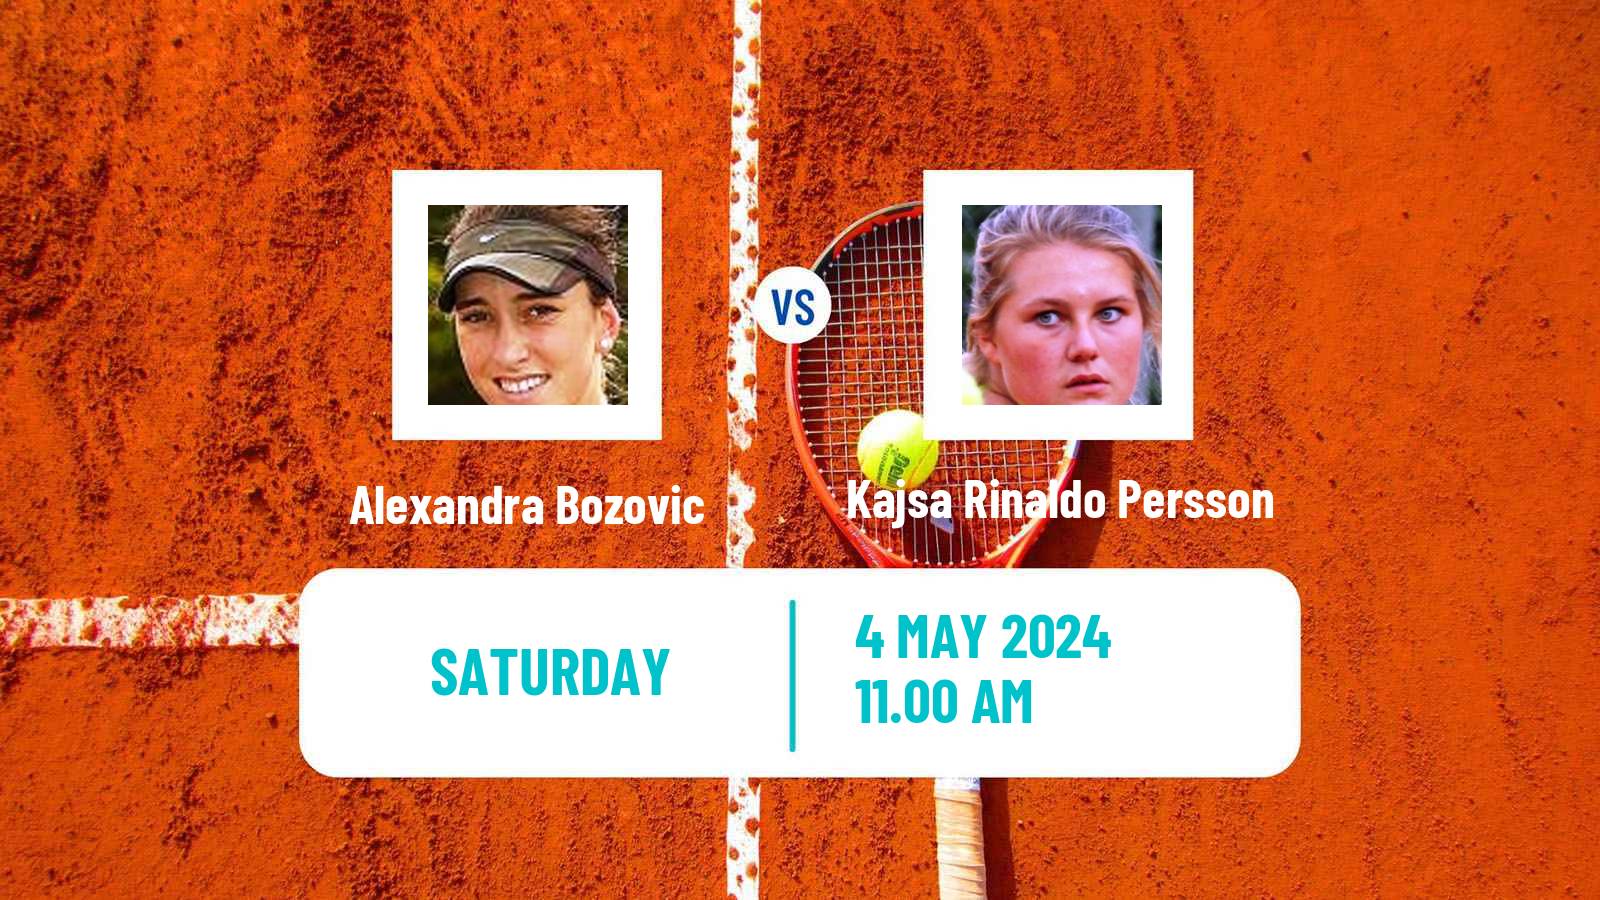 Tennis ITF W35 Boca Raton Fl 2 Women Alexandra Bozovic - Kajsa Rinaldo Persson